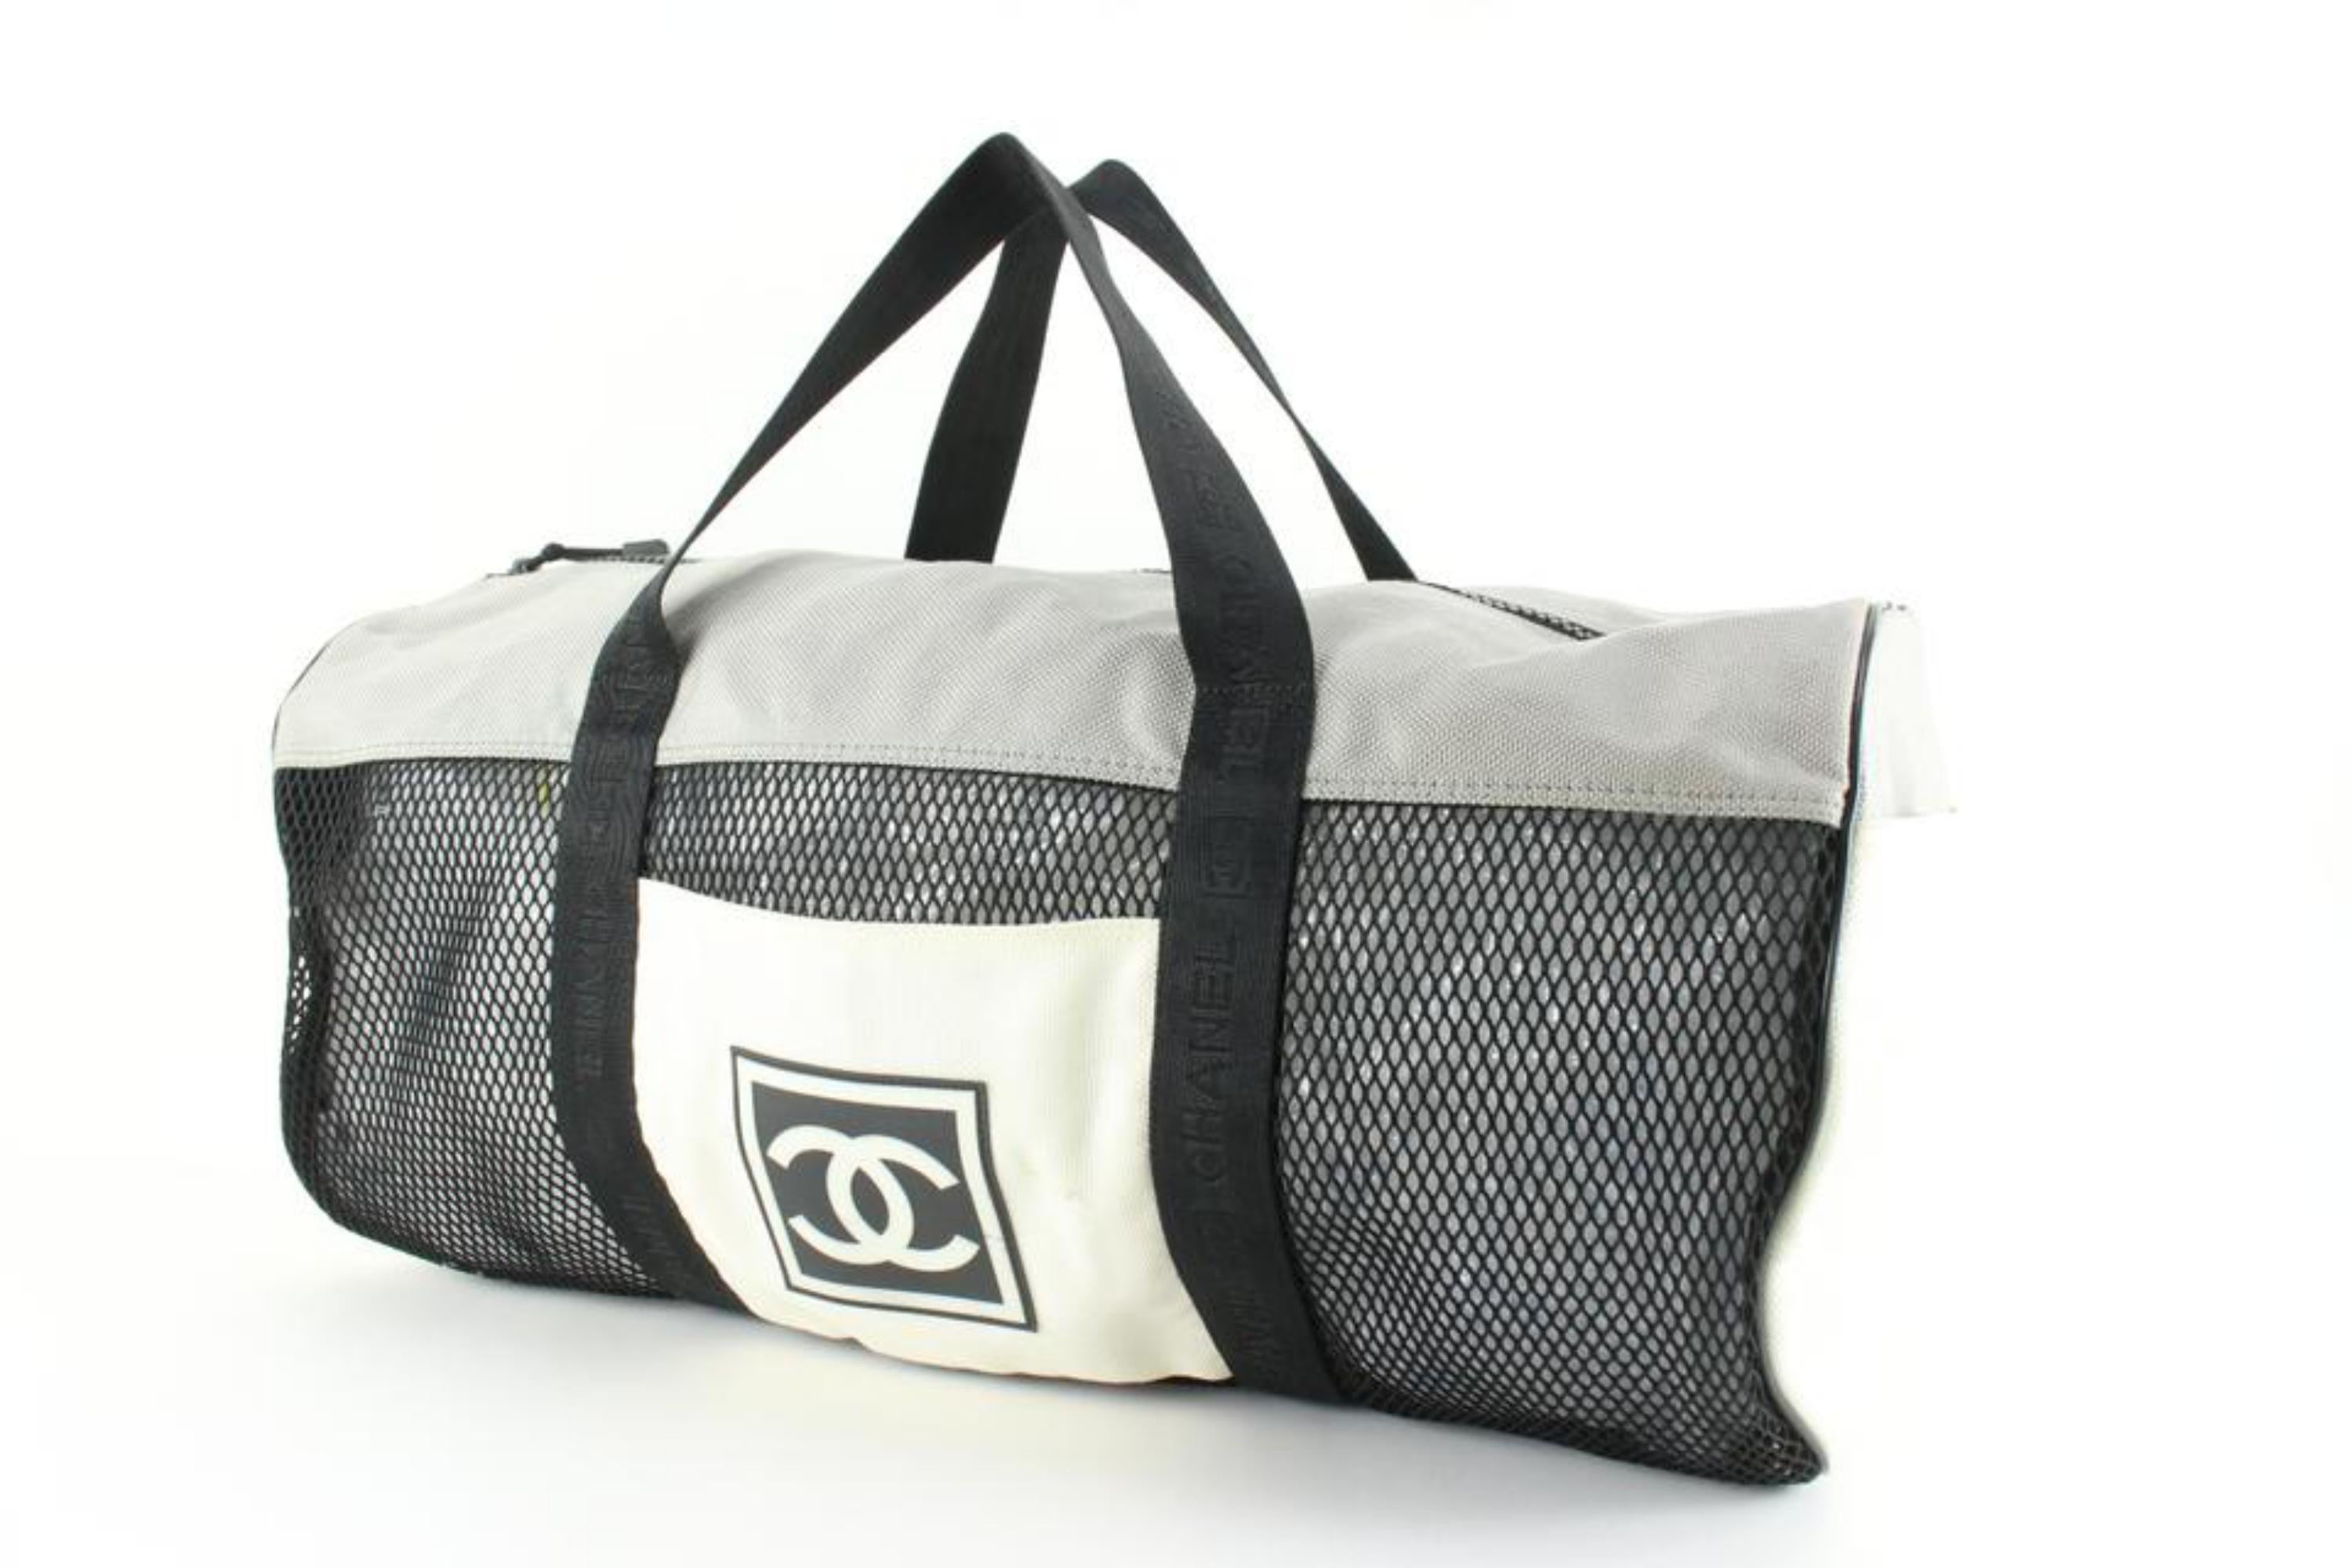 Chanel Boston Bag - 15 For Sale on 1stDibs